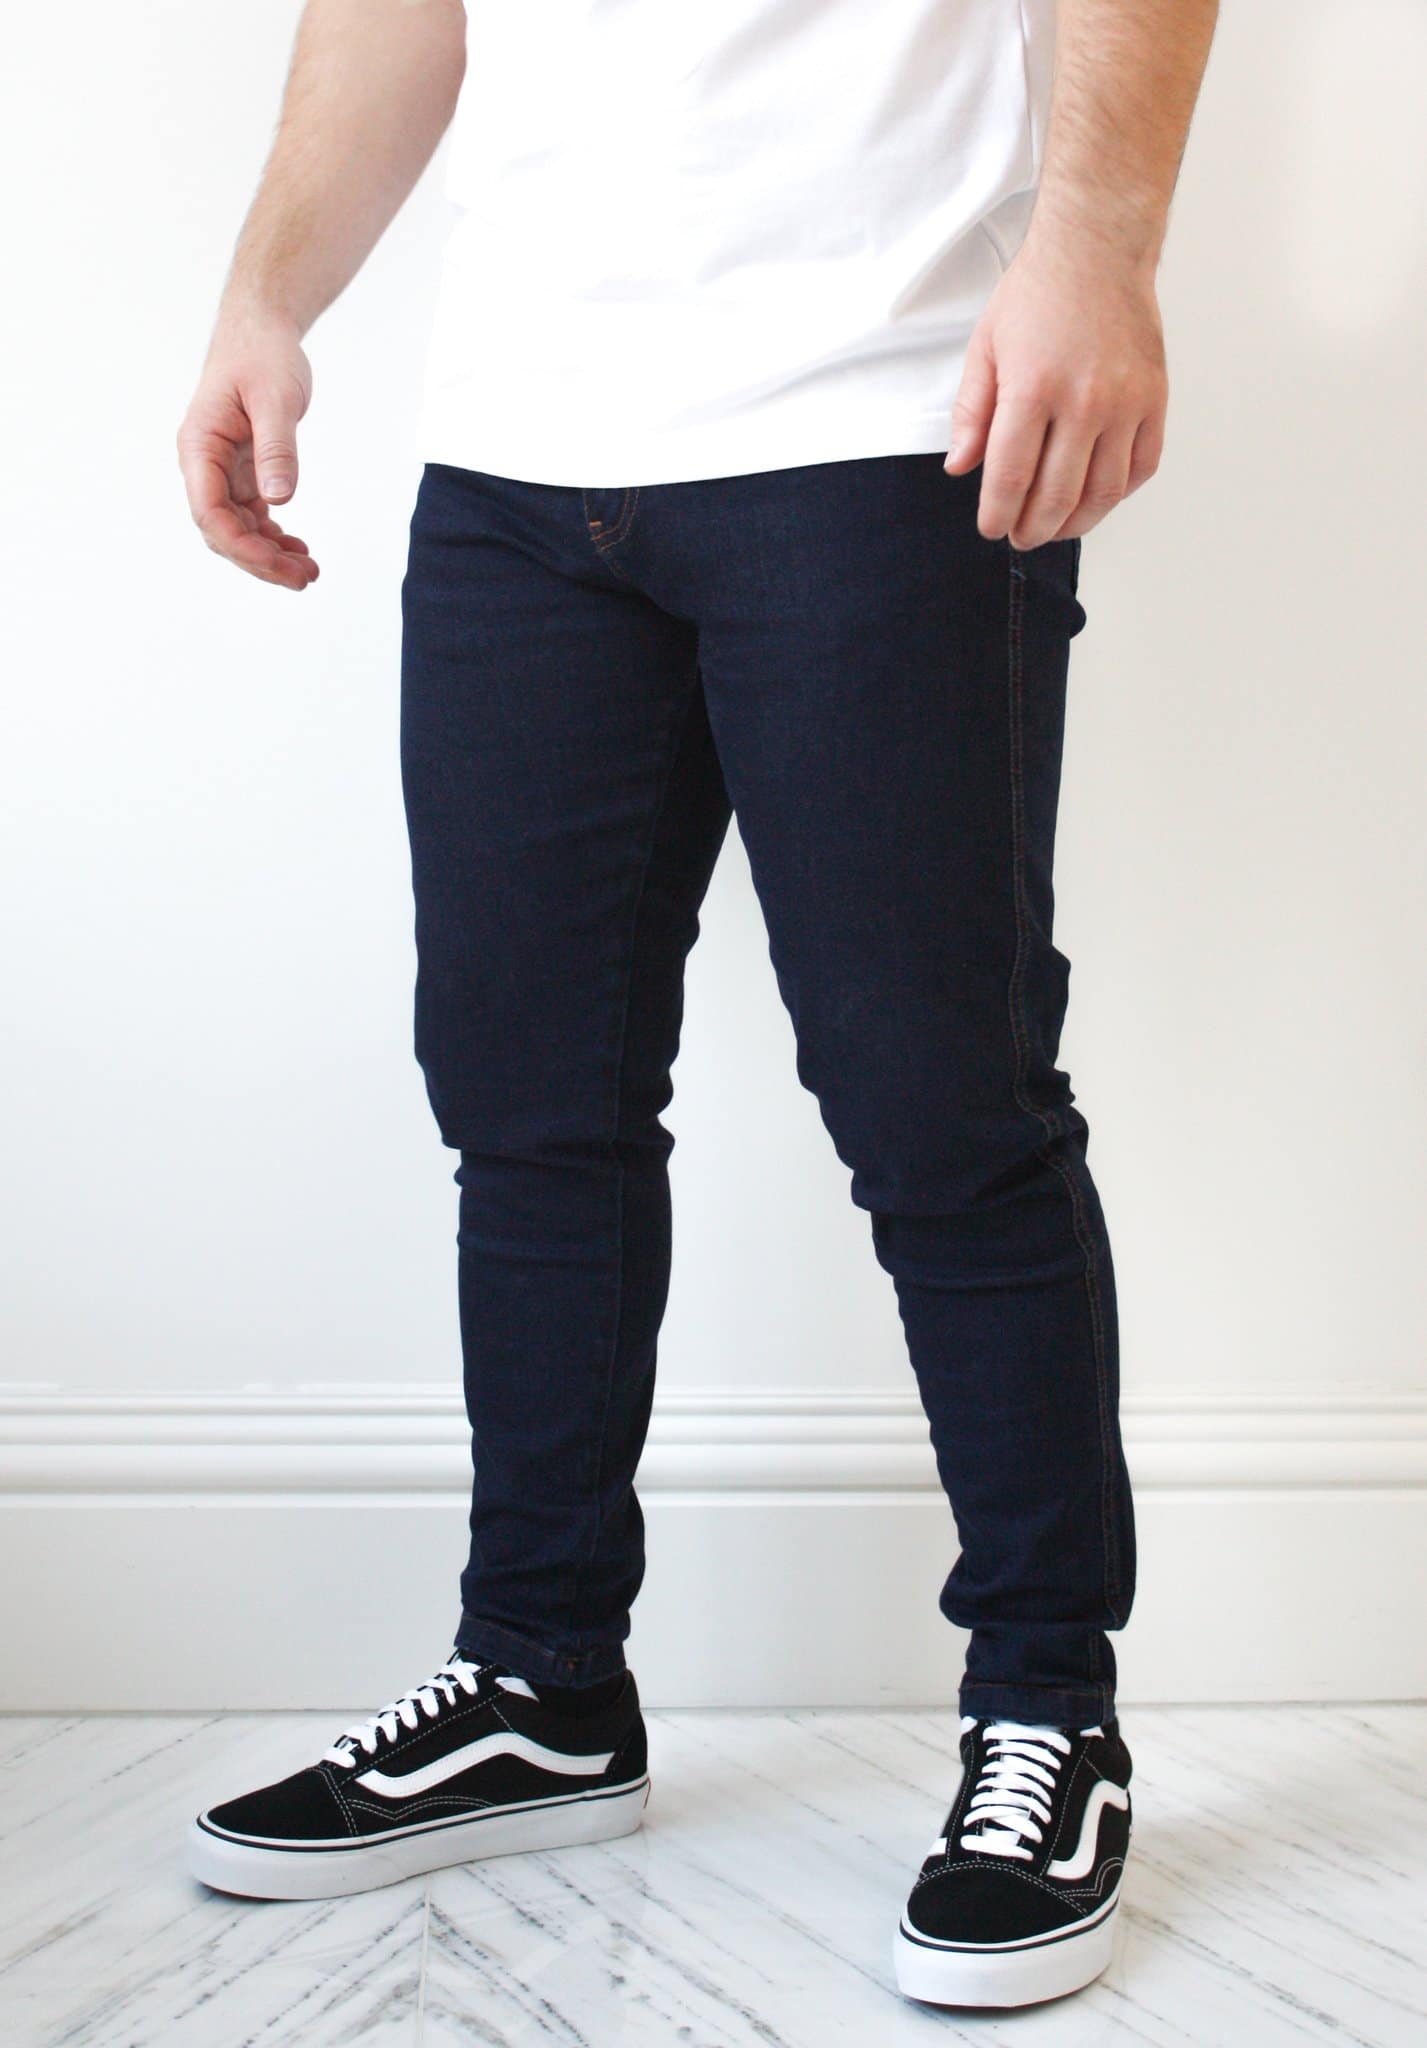 Bantam Clothing jeans